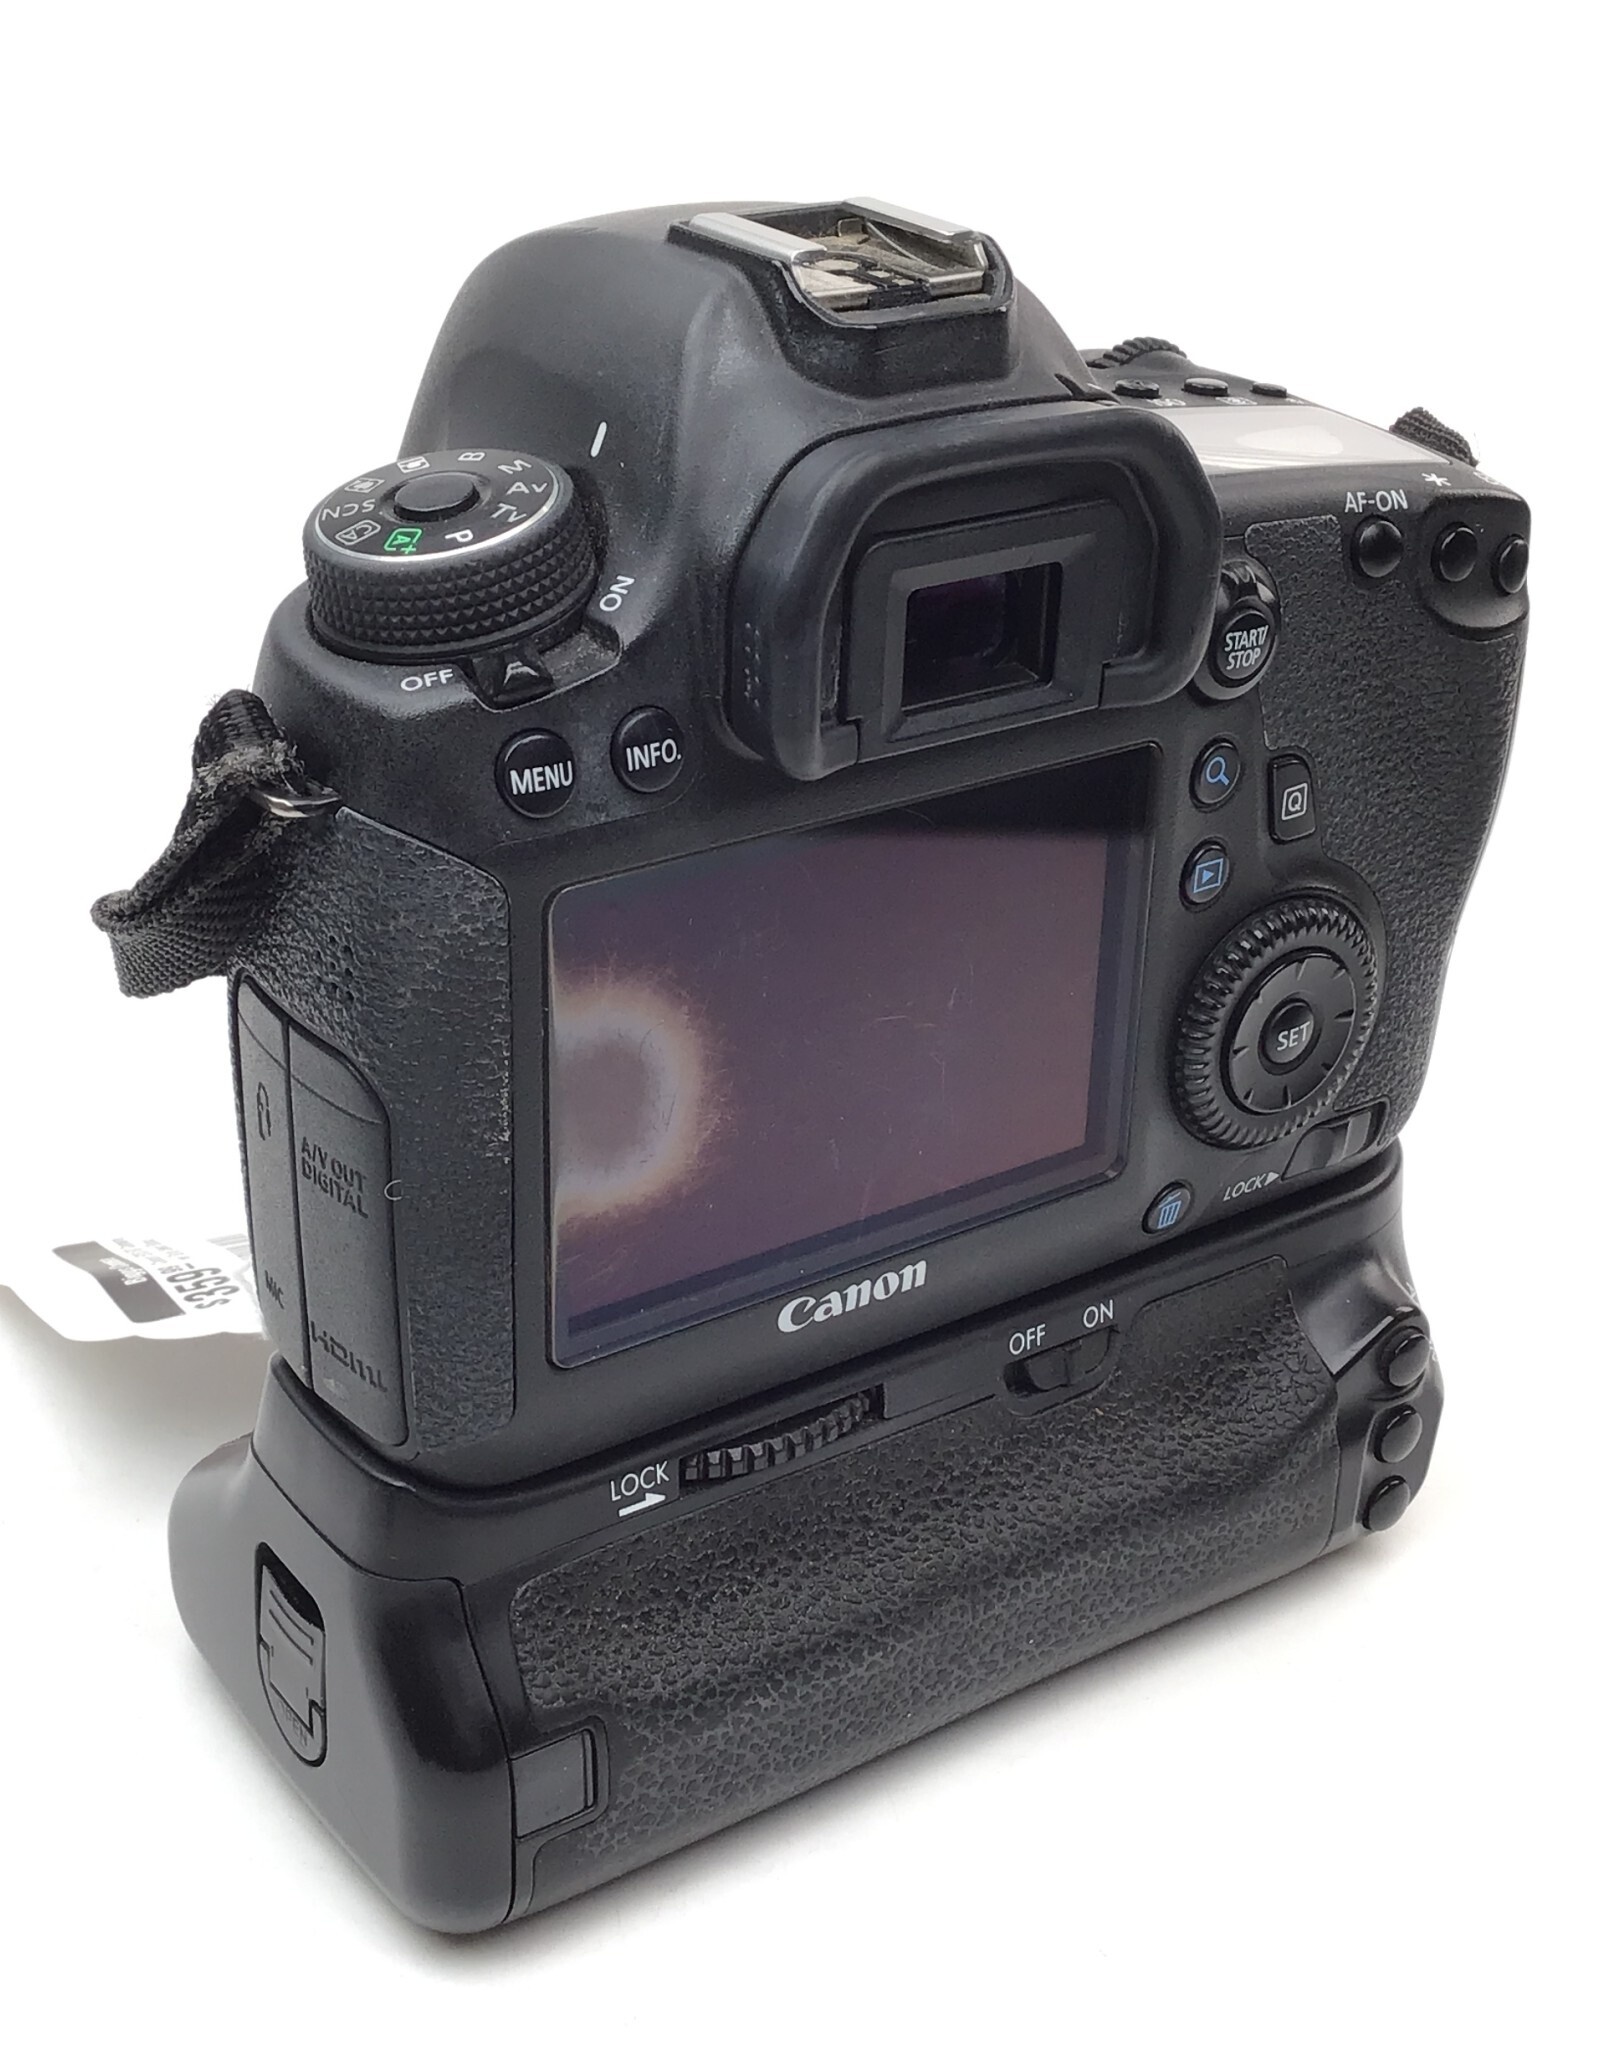 CANON Canon EOS 6D Camera w/ Grip Used Good